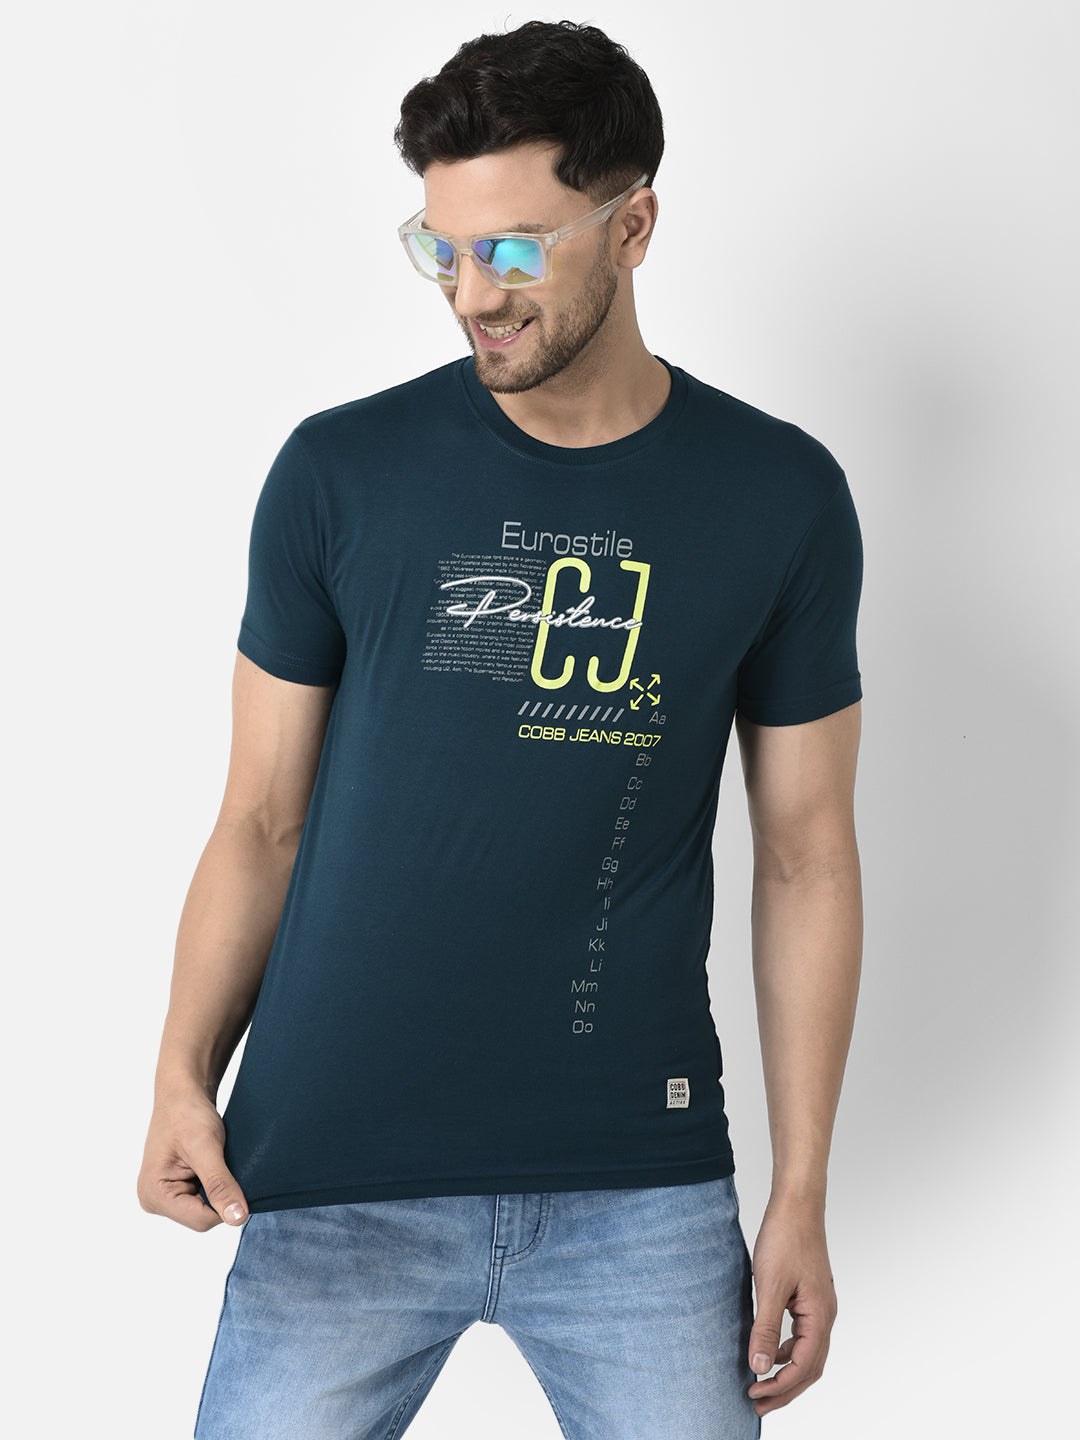 Cobb Teal Printed Regular Fit T-Shirt Teal Blue